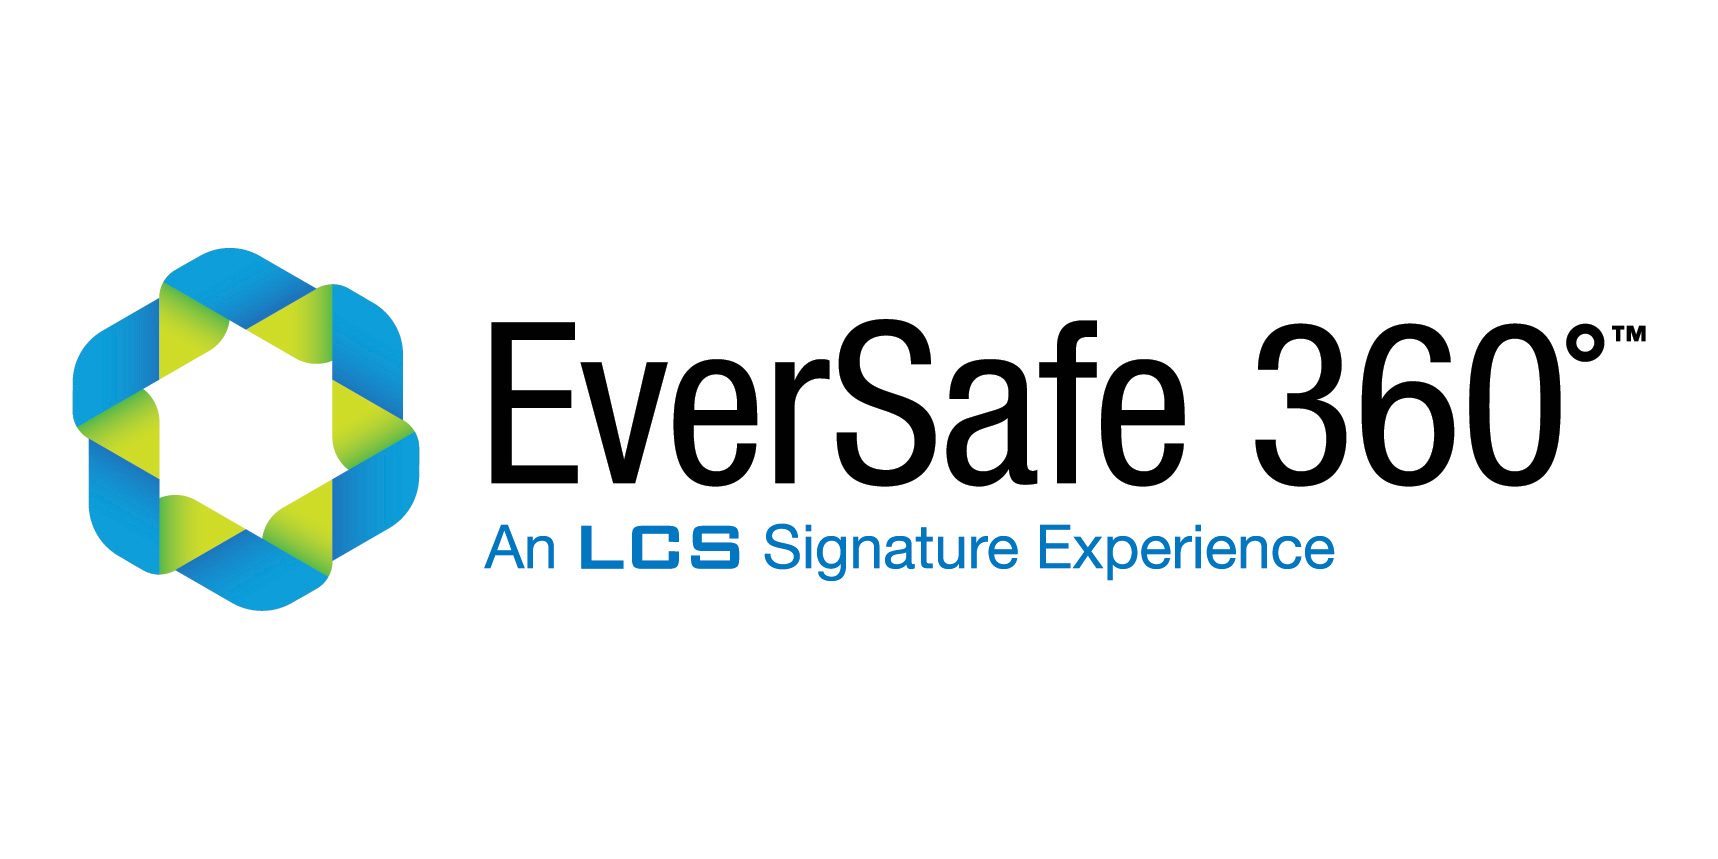 EverSafe 360 degrees logo